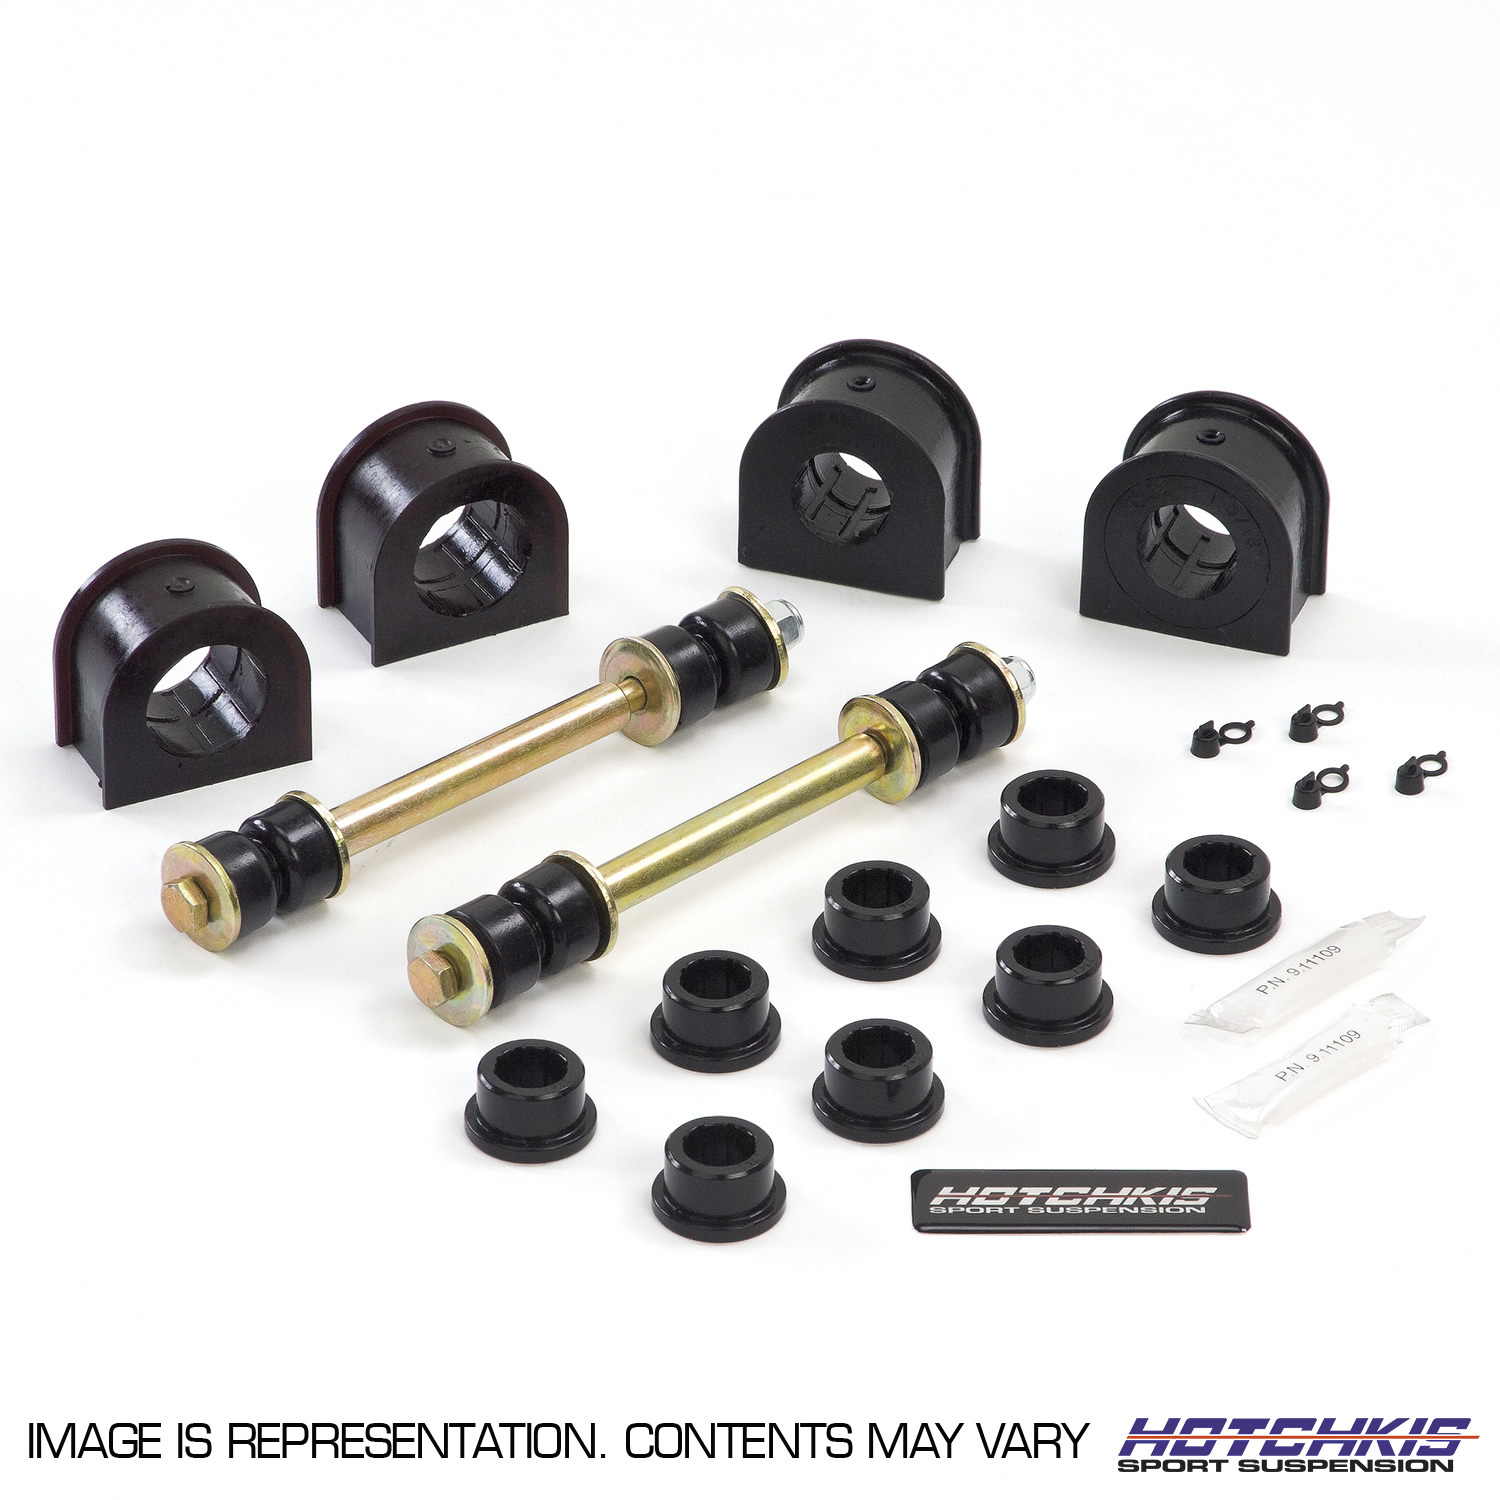 Rebuild Service Kit For Hotchkis Sport Suspension Product Kit 22400F